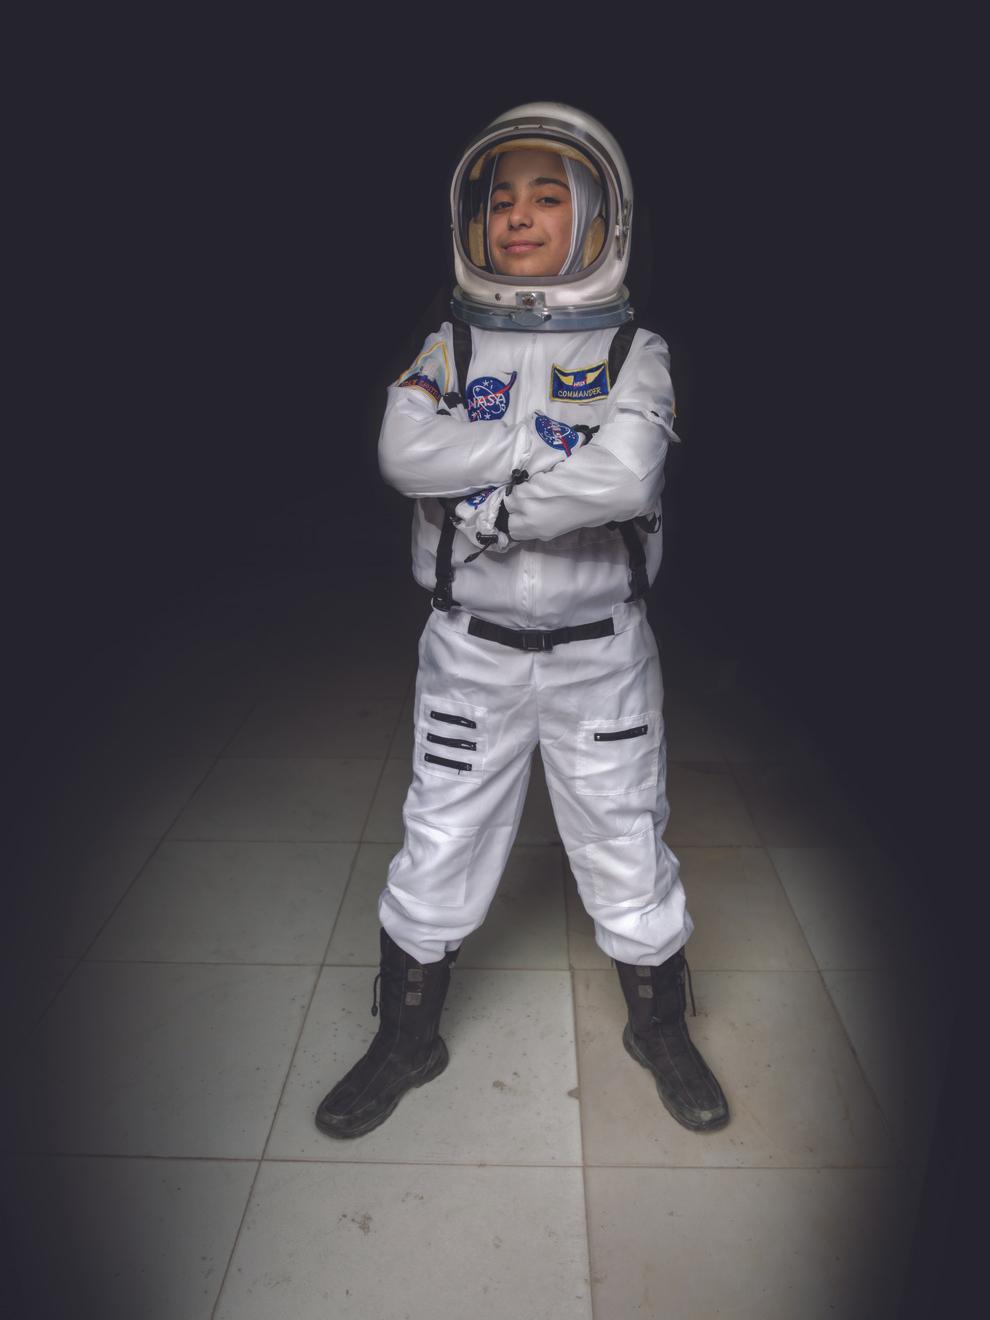 Haja, 12, wants to be an astronaut.